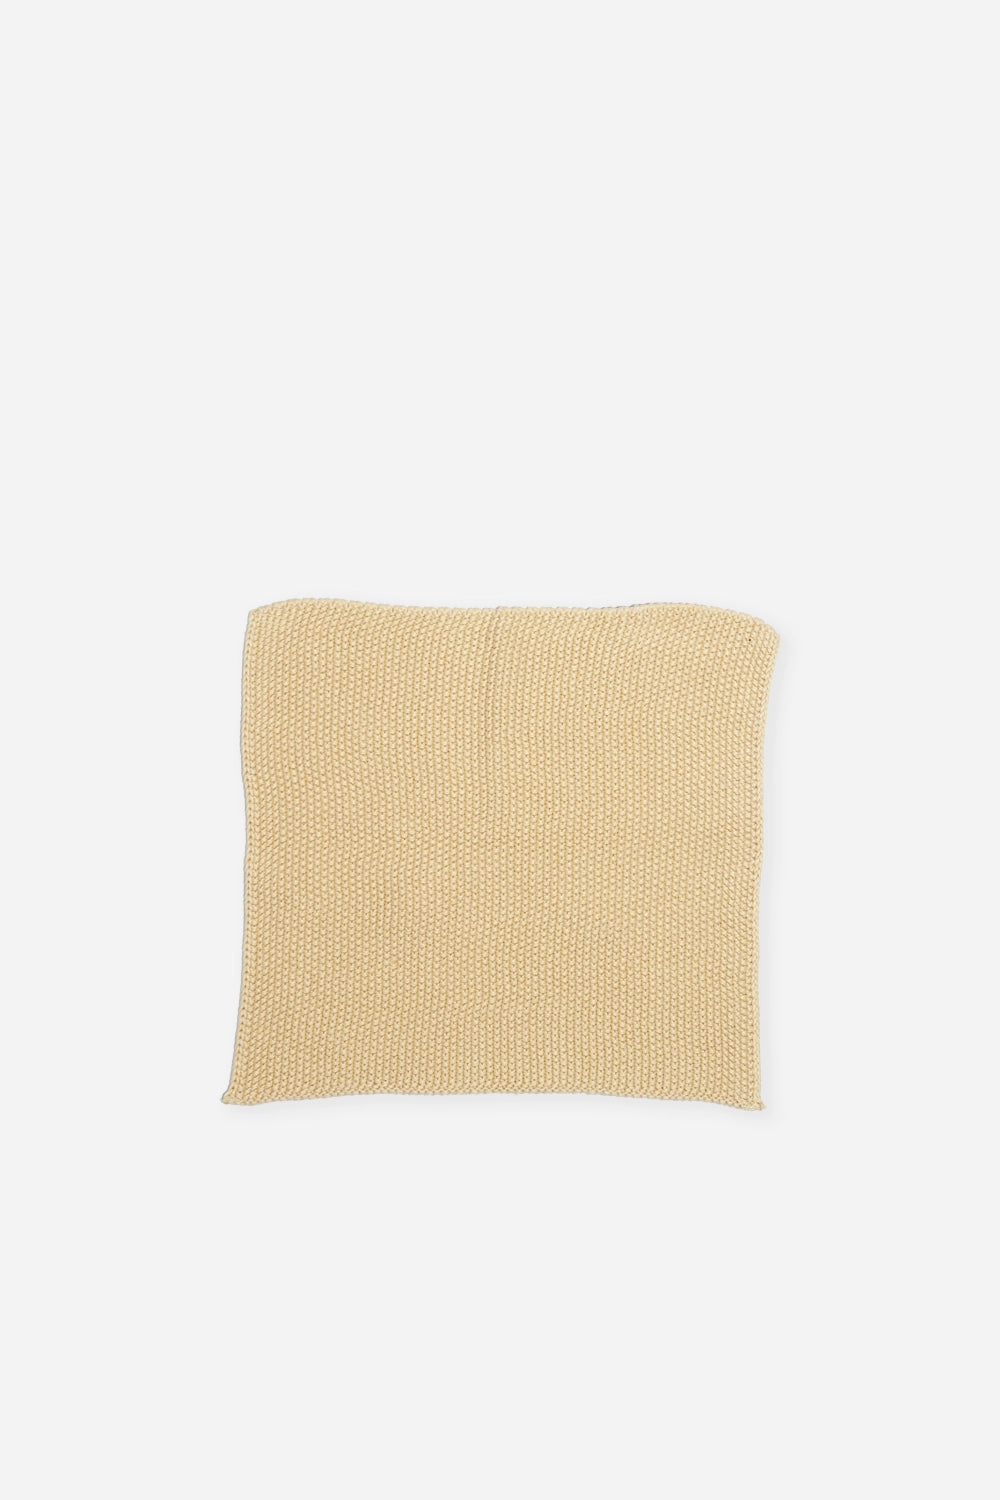 Knitted Dish Cloth / Lemonade